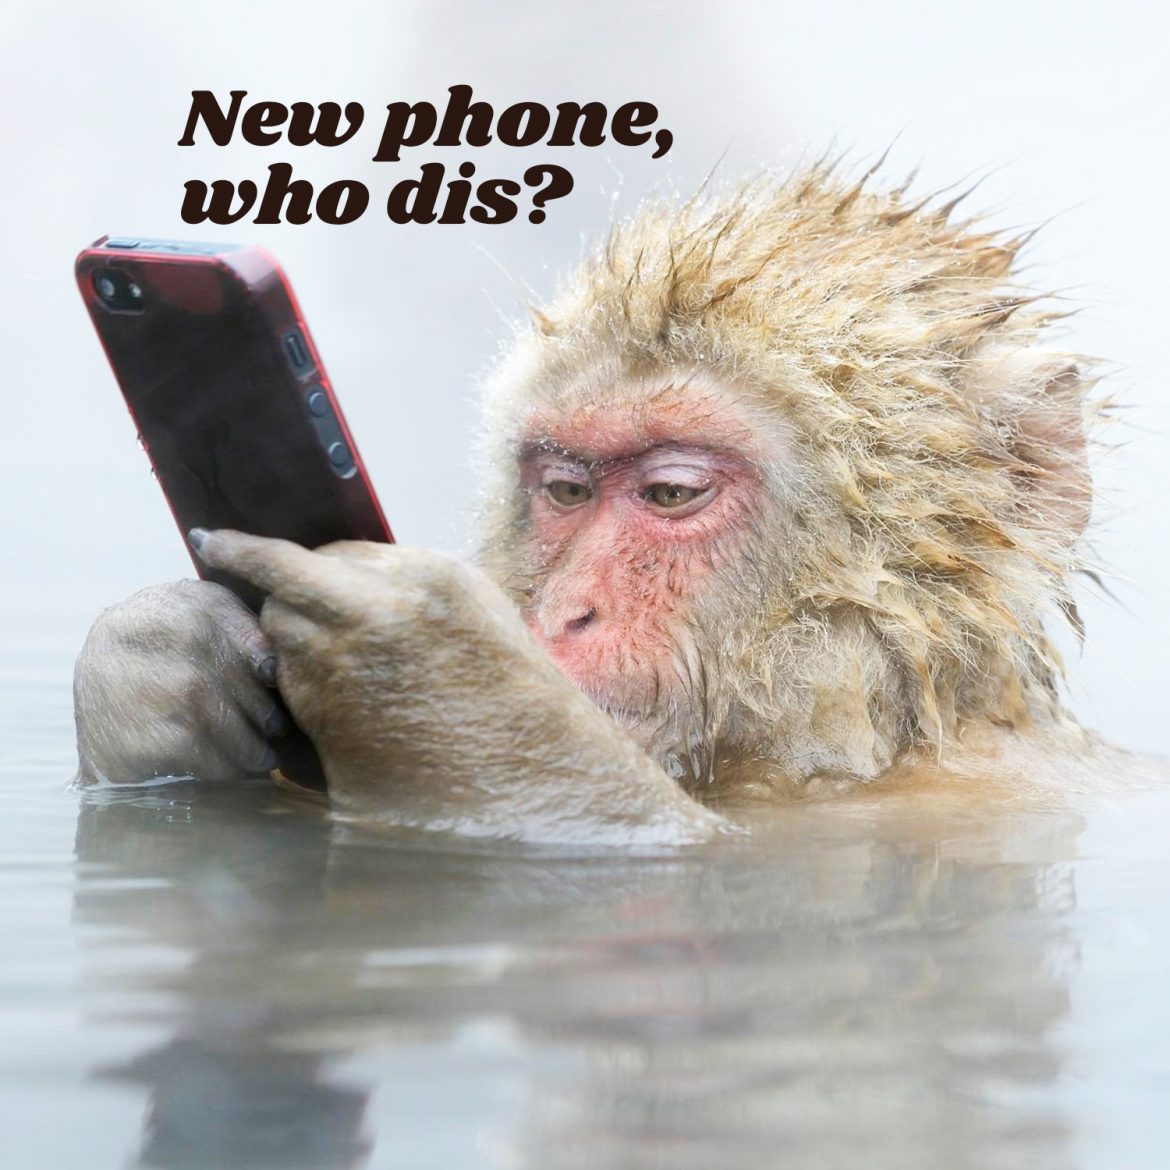 New phone, who dis?